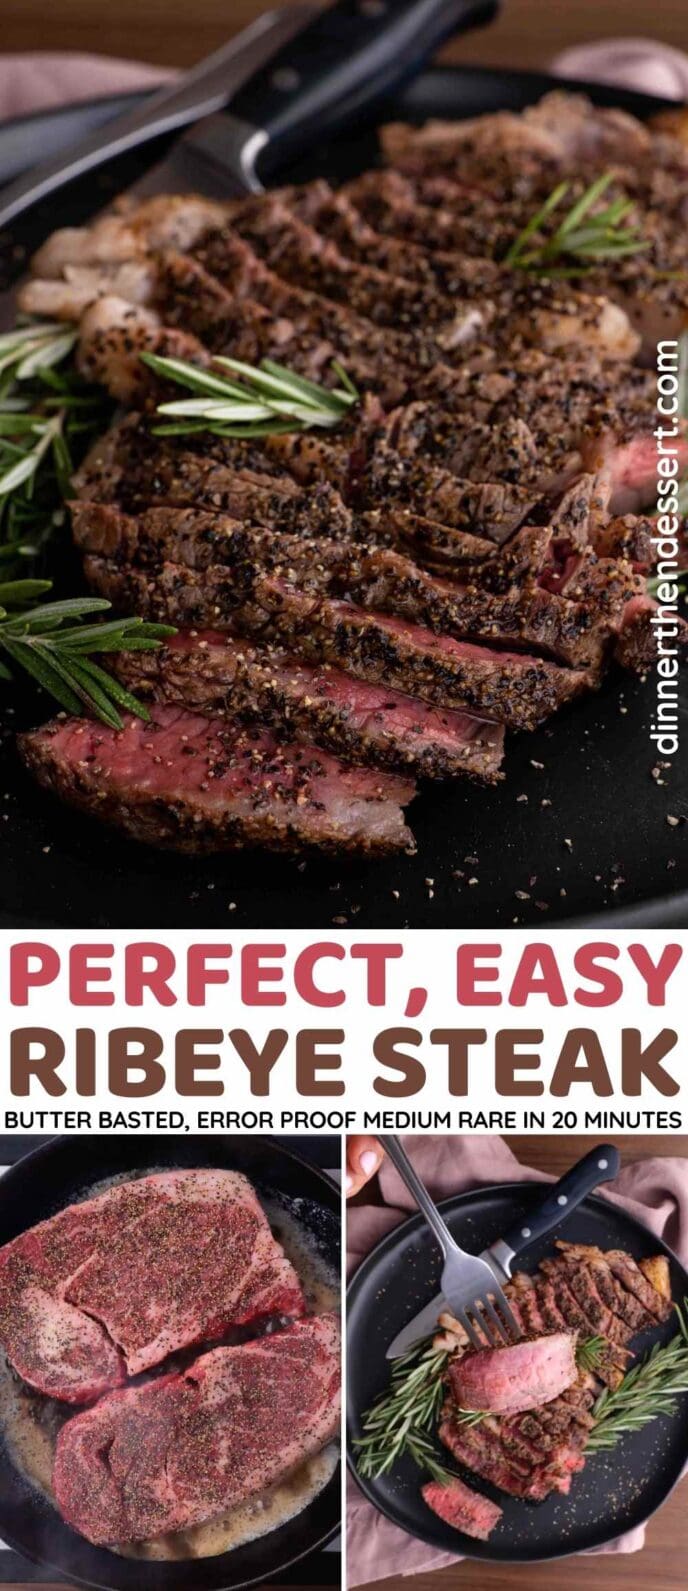 Ribeye Steak Collage